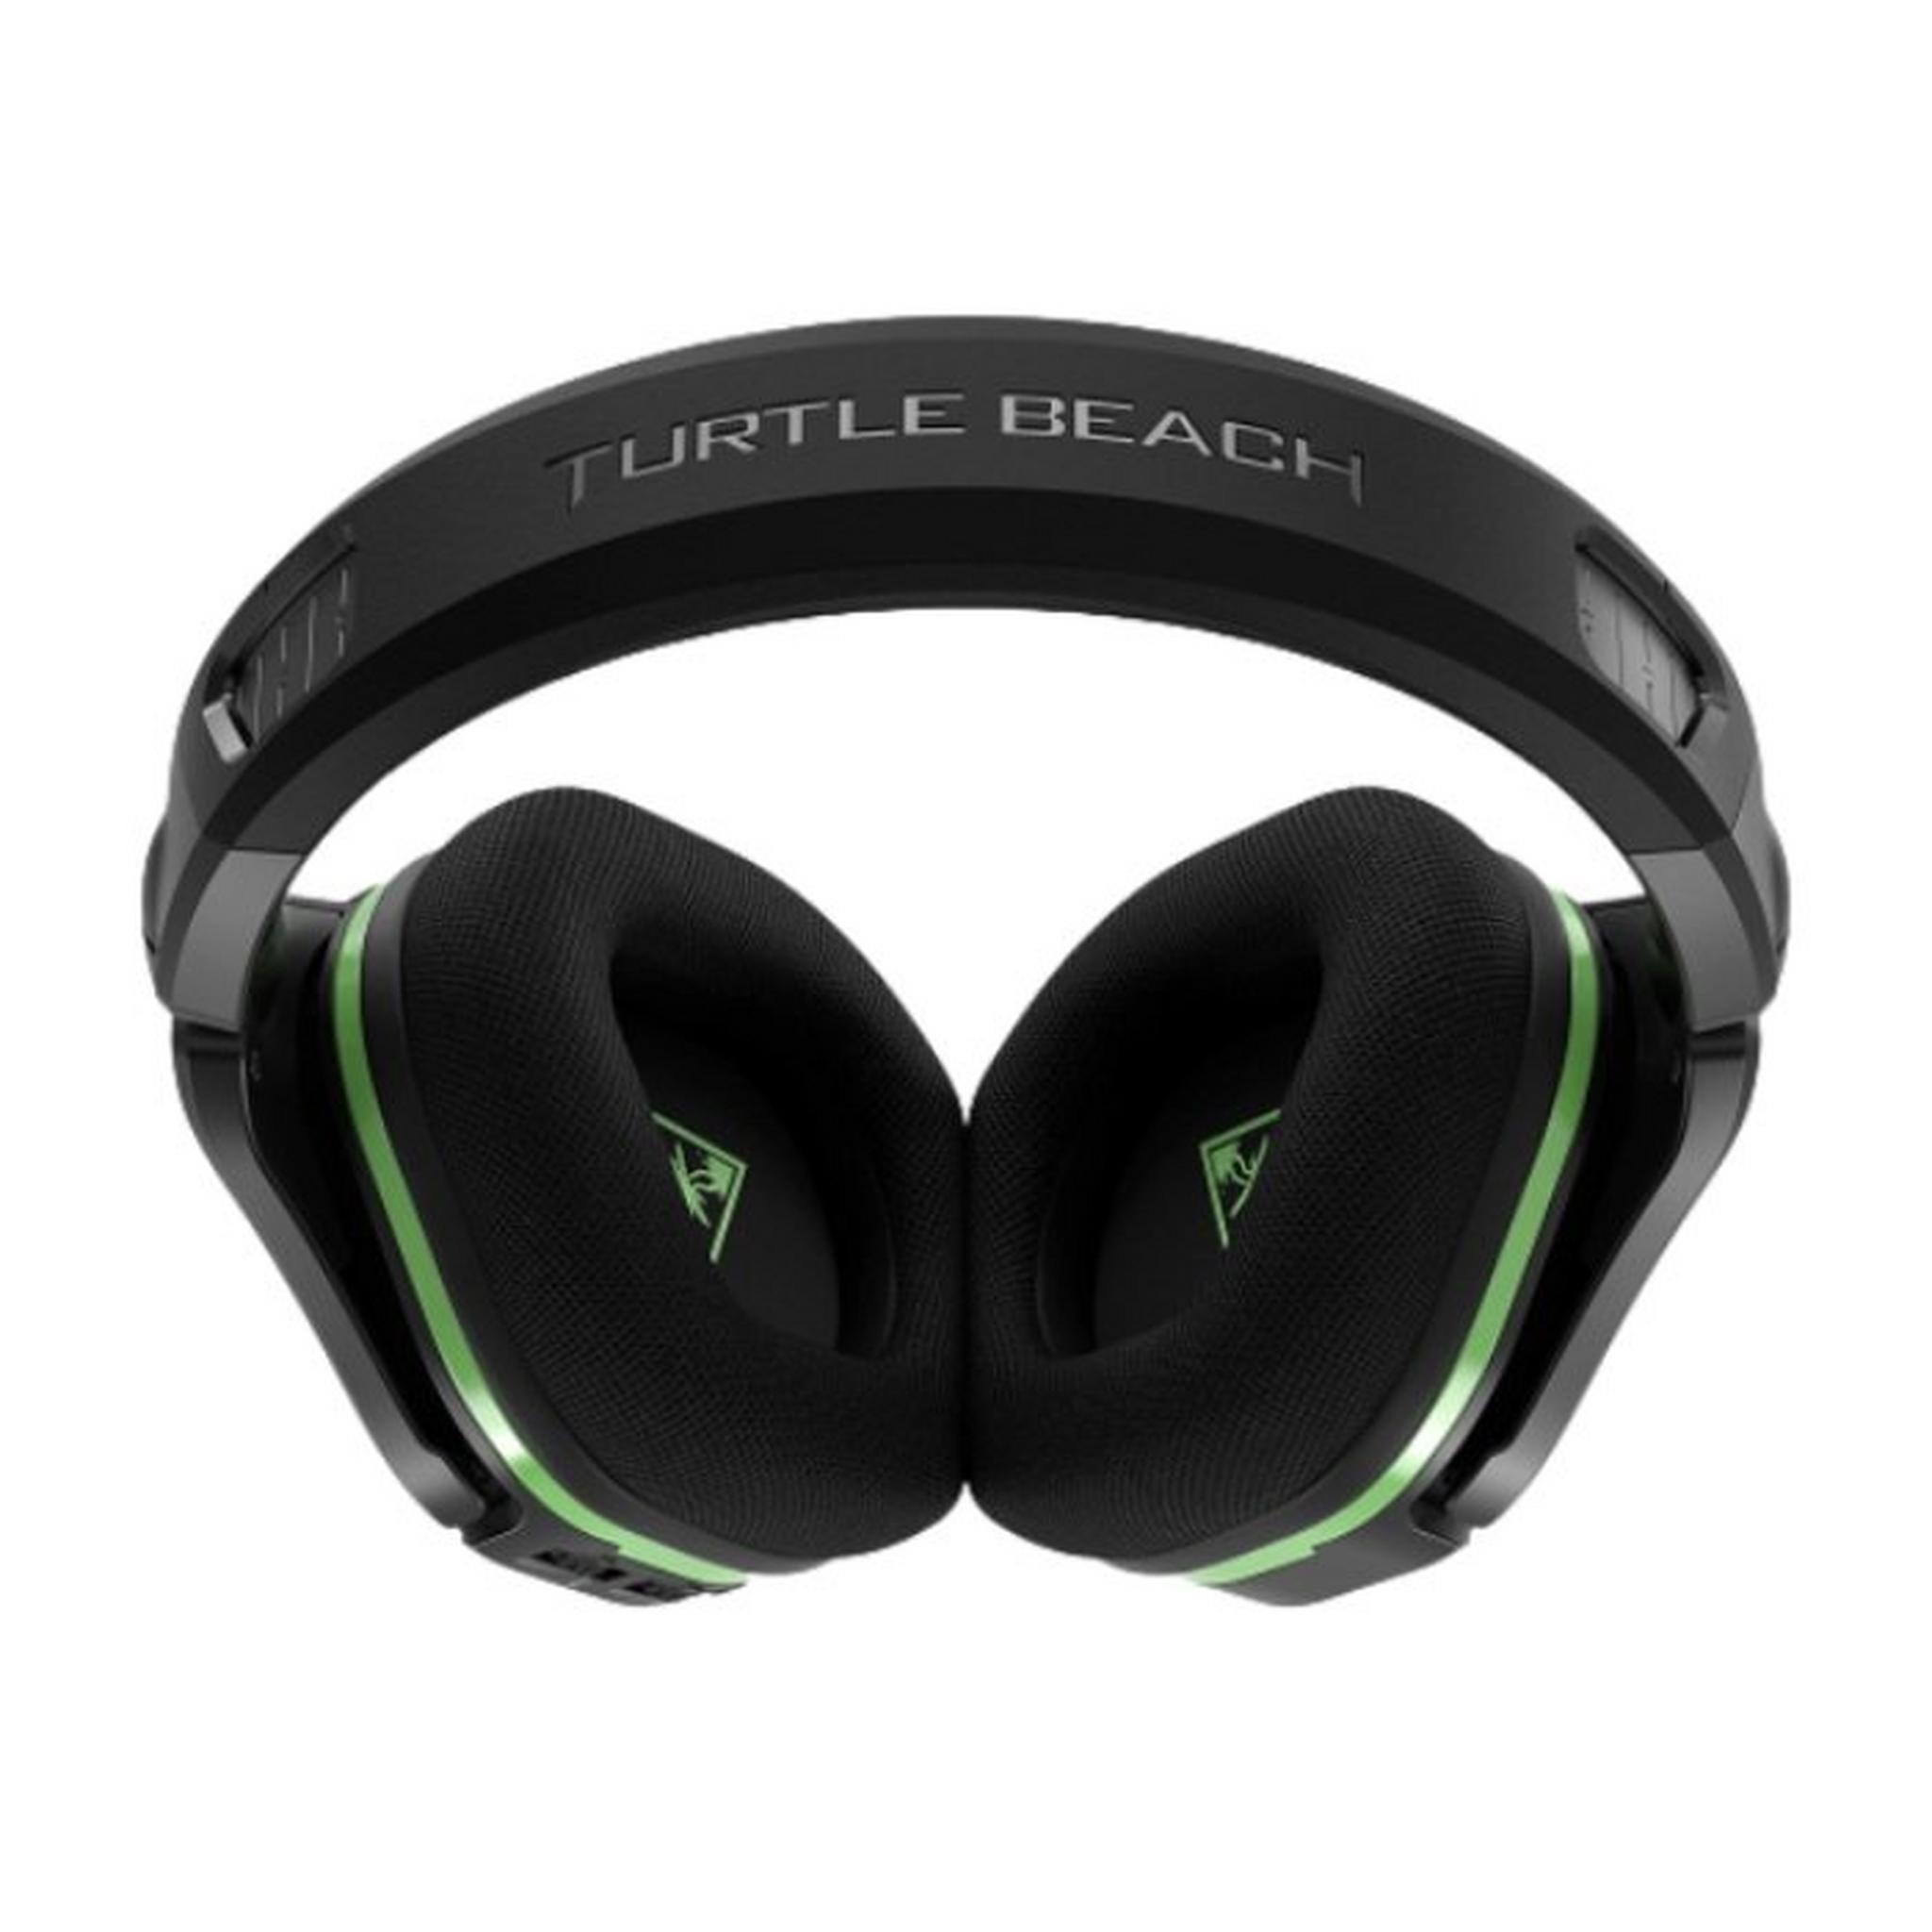 TurtleBeach Stealth 600 Gen 2 Xbox Gaming Headset - Black